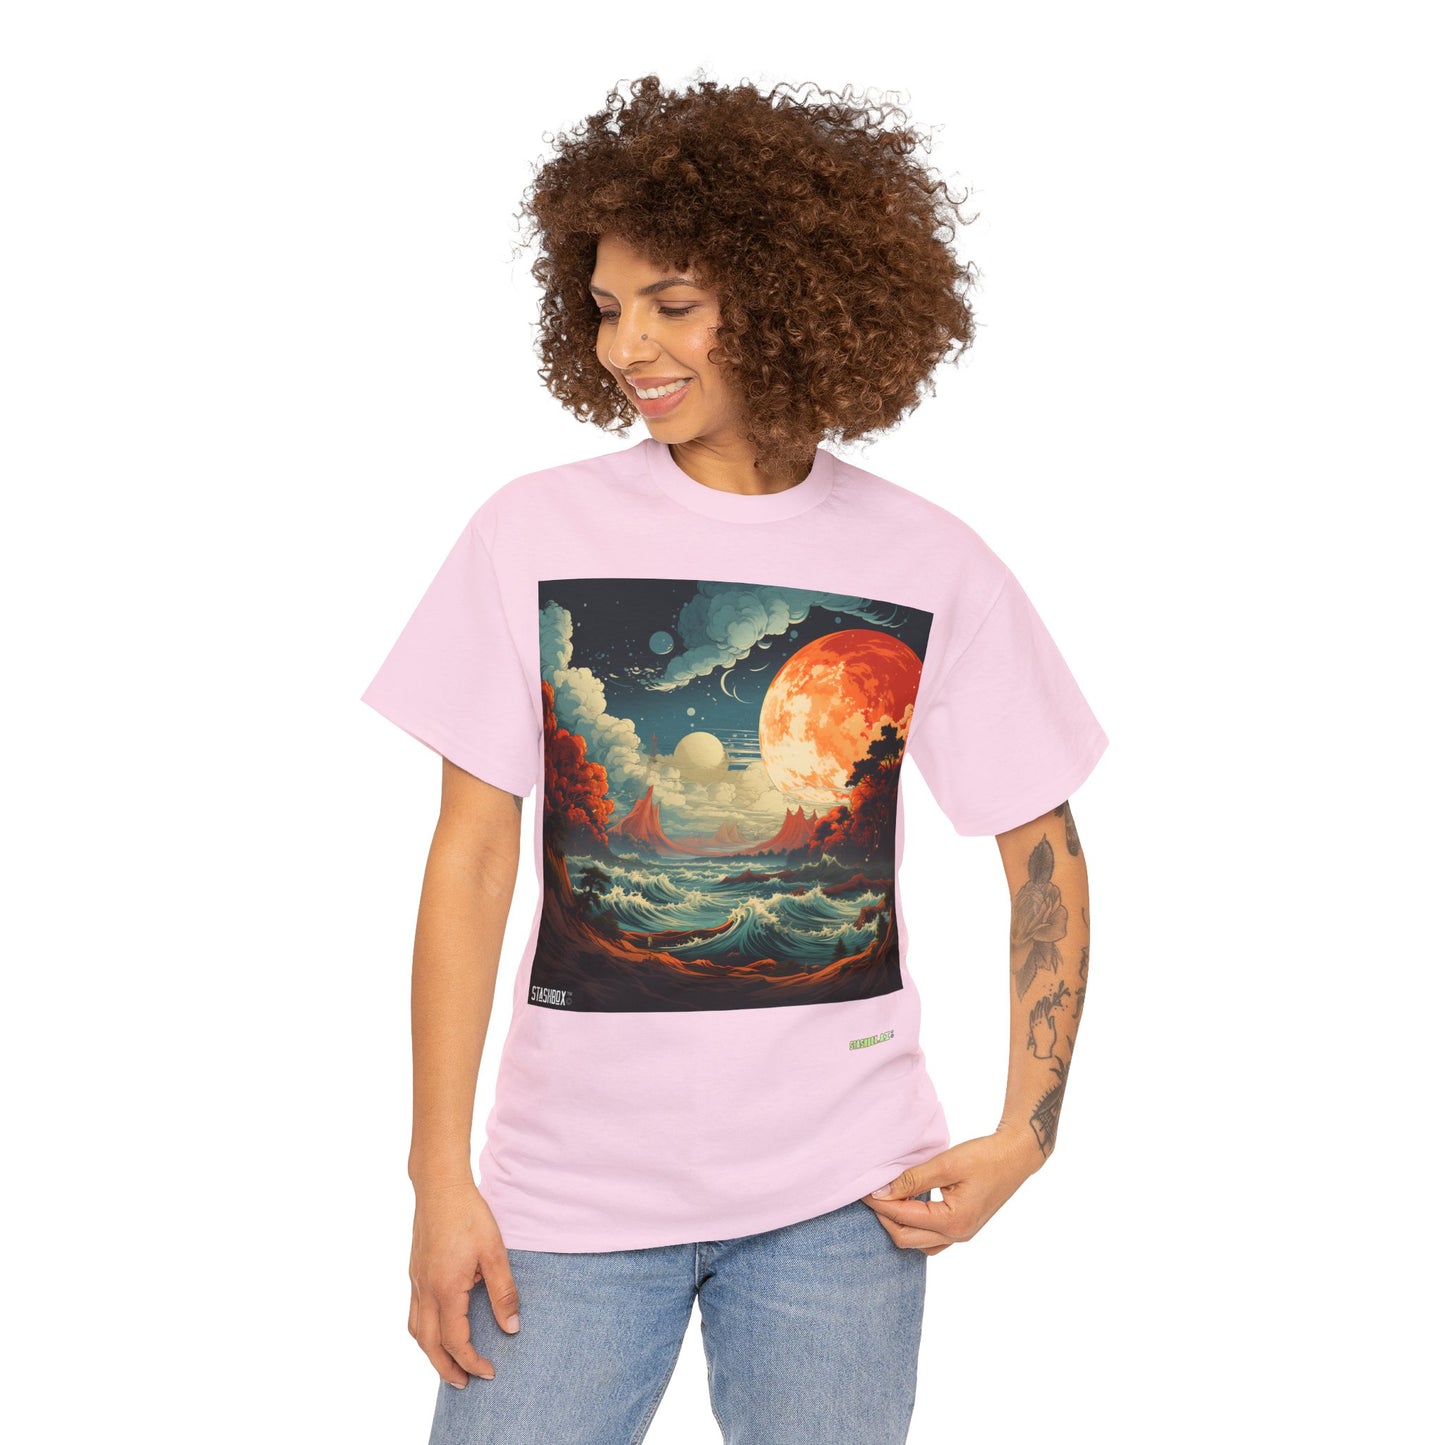 Unisex Heavy Cotton Tshirt Spacy Colorful Beach w/ Waves 37